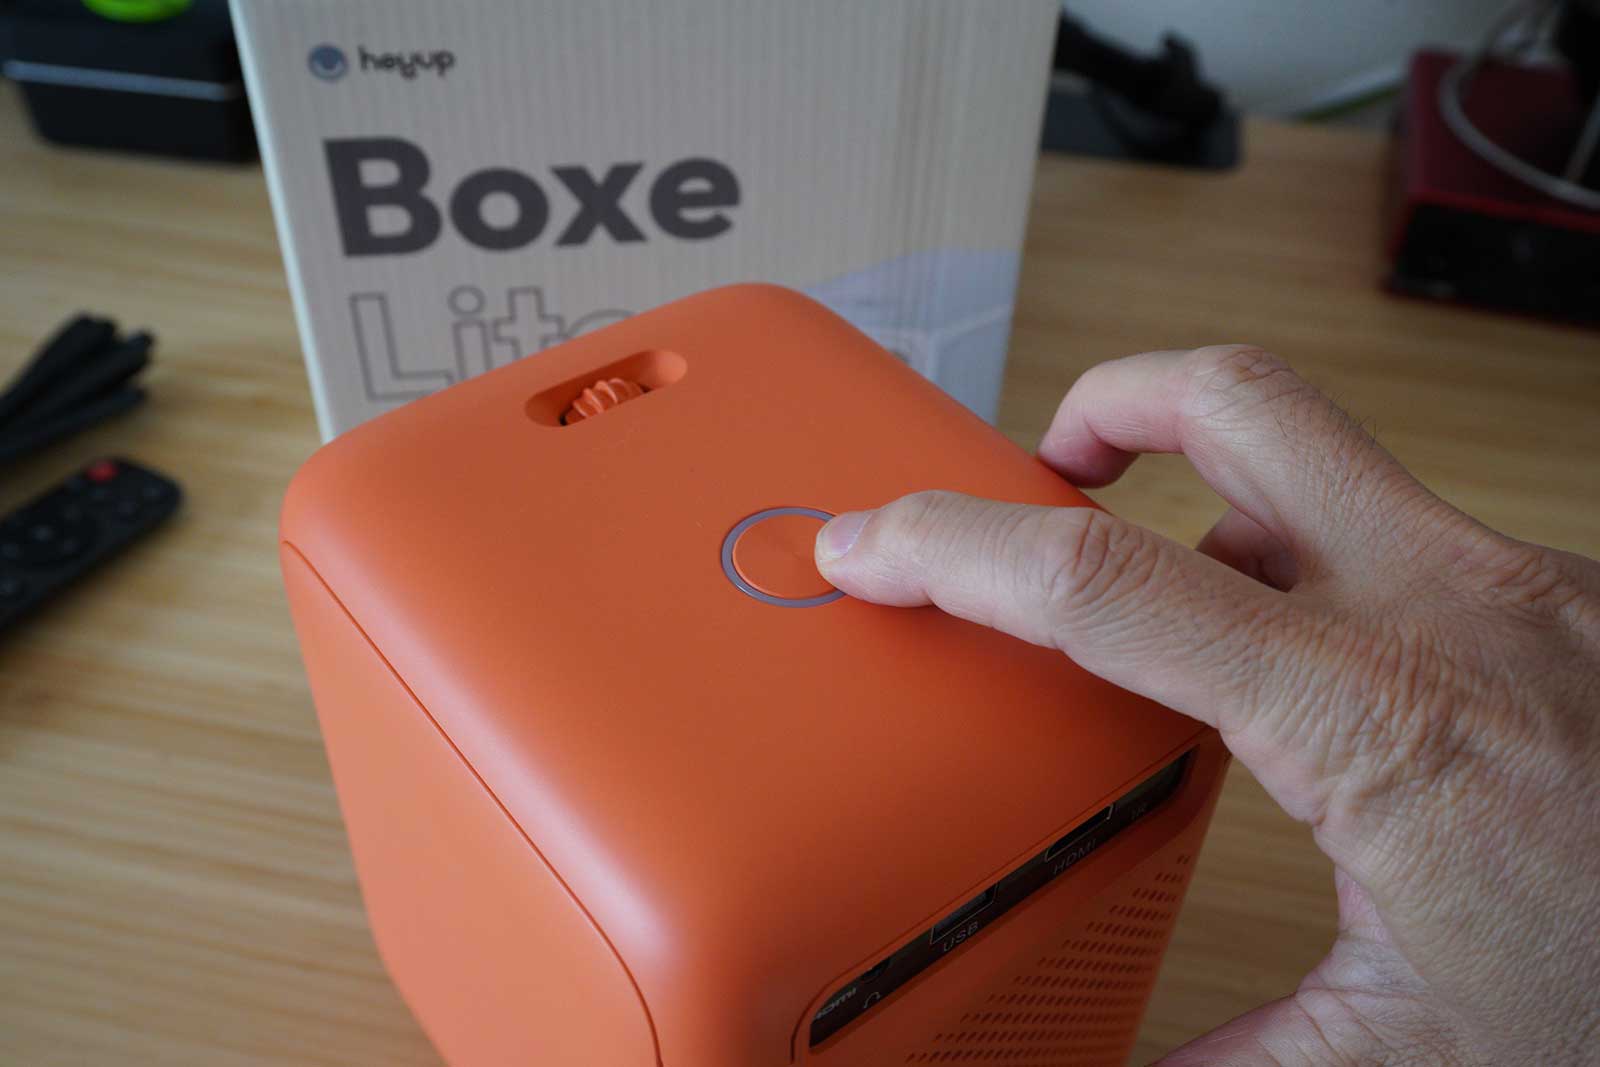 Heyup Boxe Lite 電源ボタン